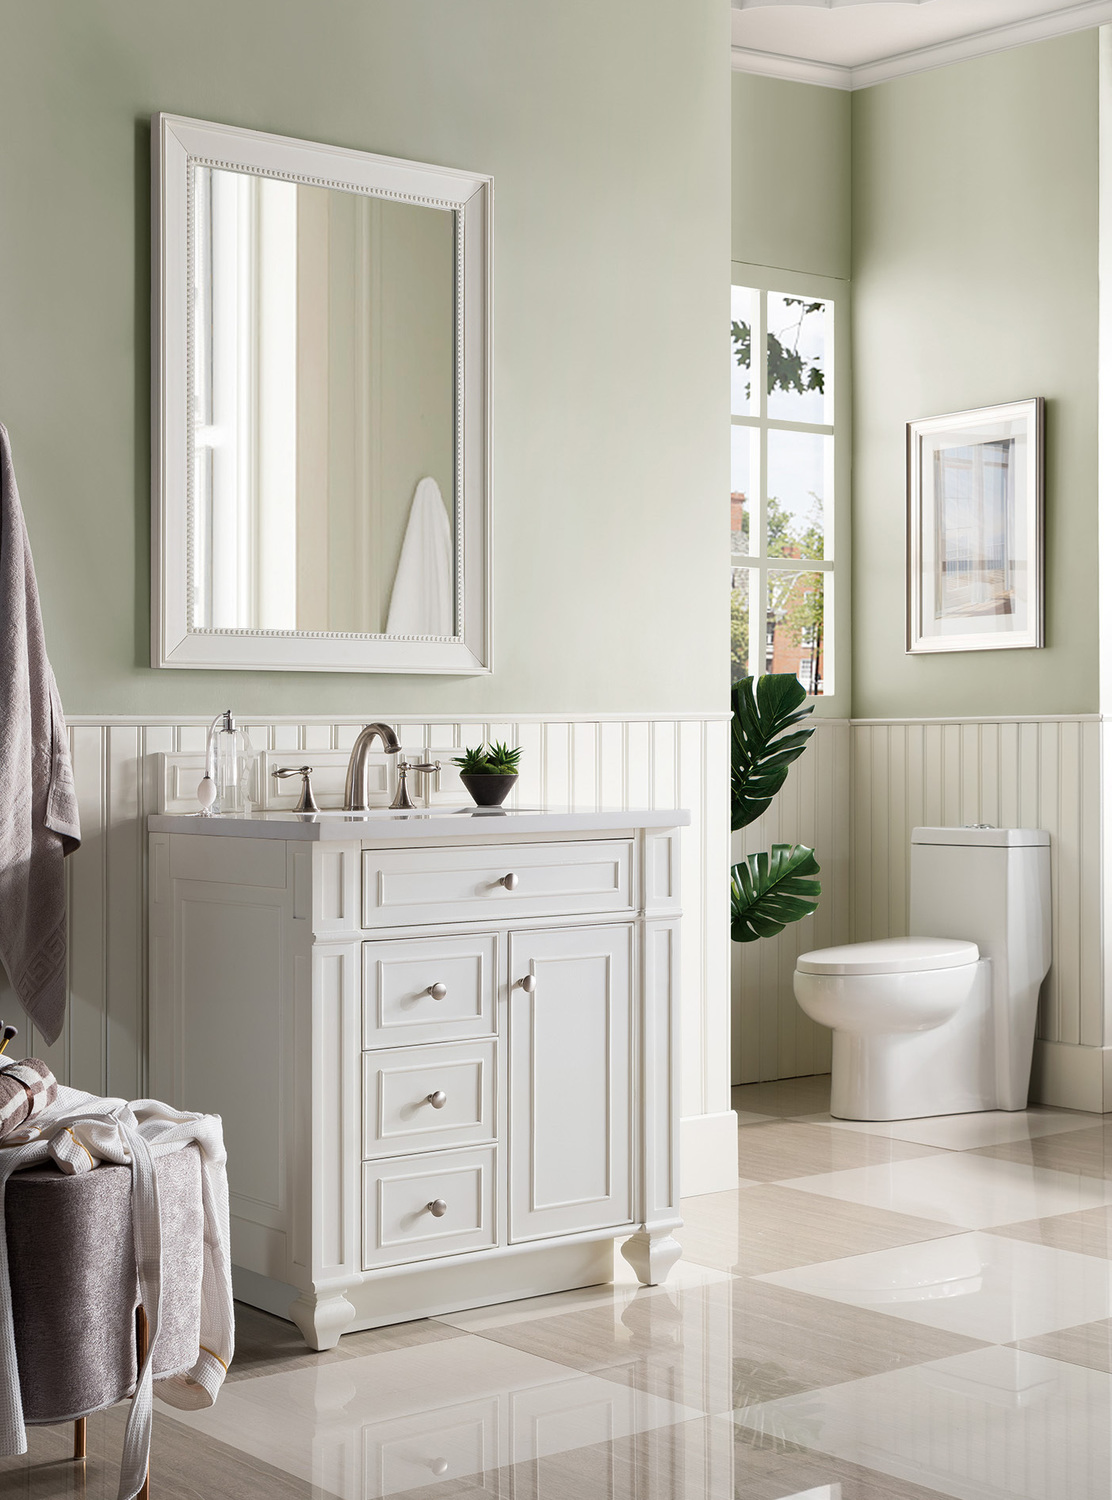 small single bathroom vanity James Martin Vanity Bright White Transitional